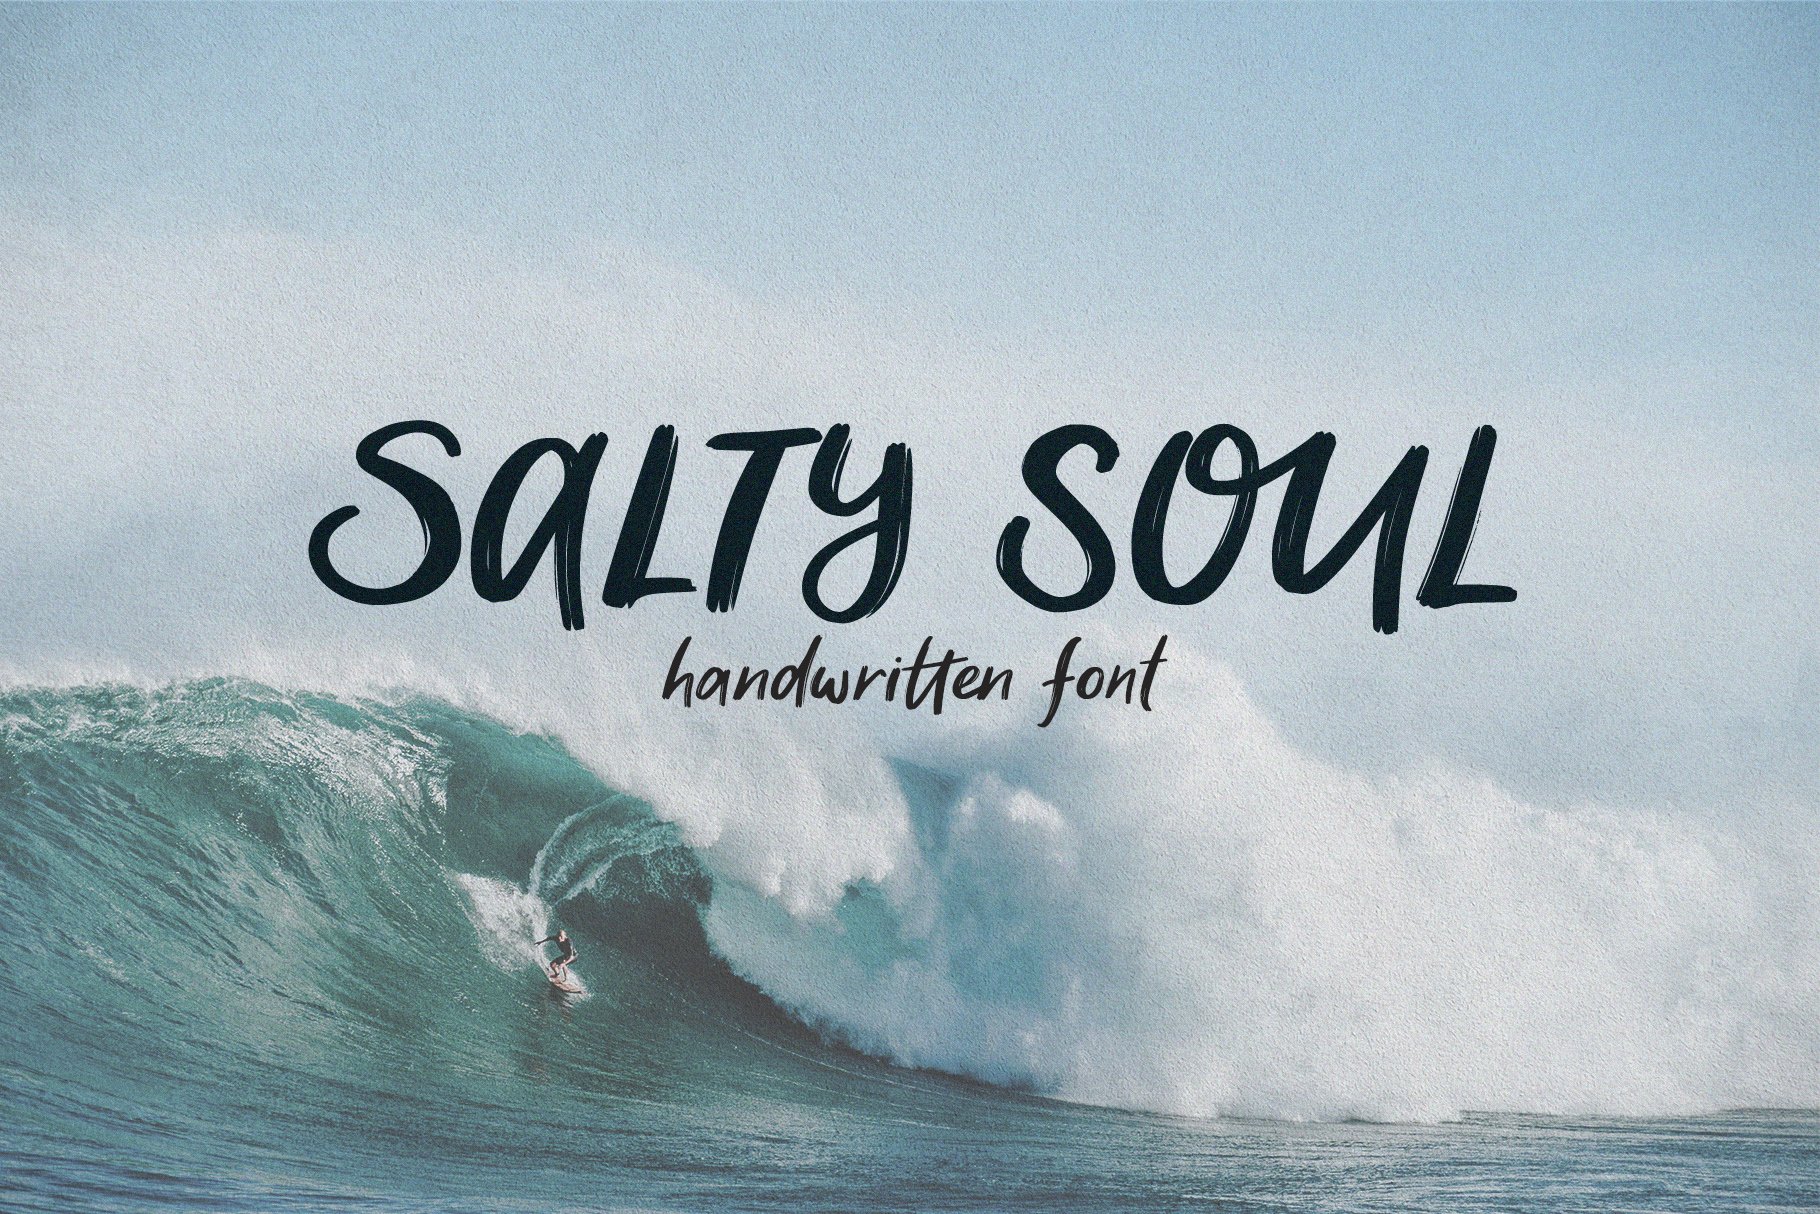 Salty Soul handwritten font sea cover image.